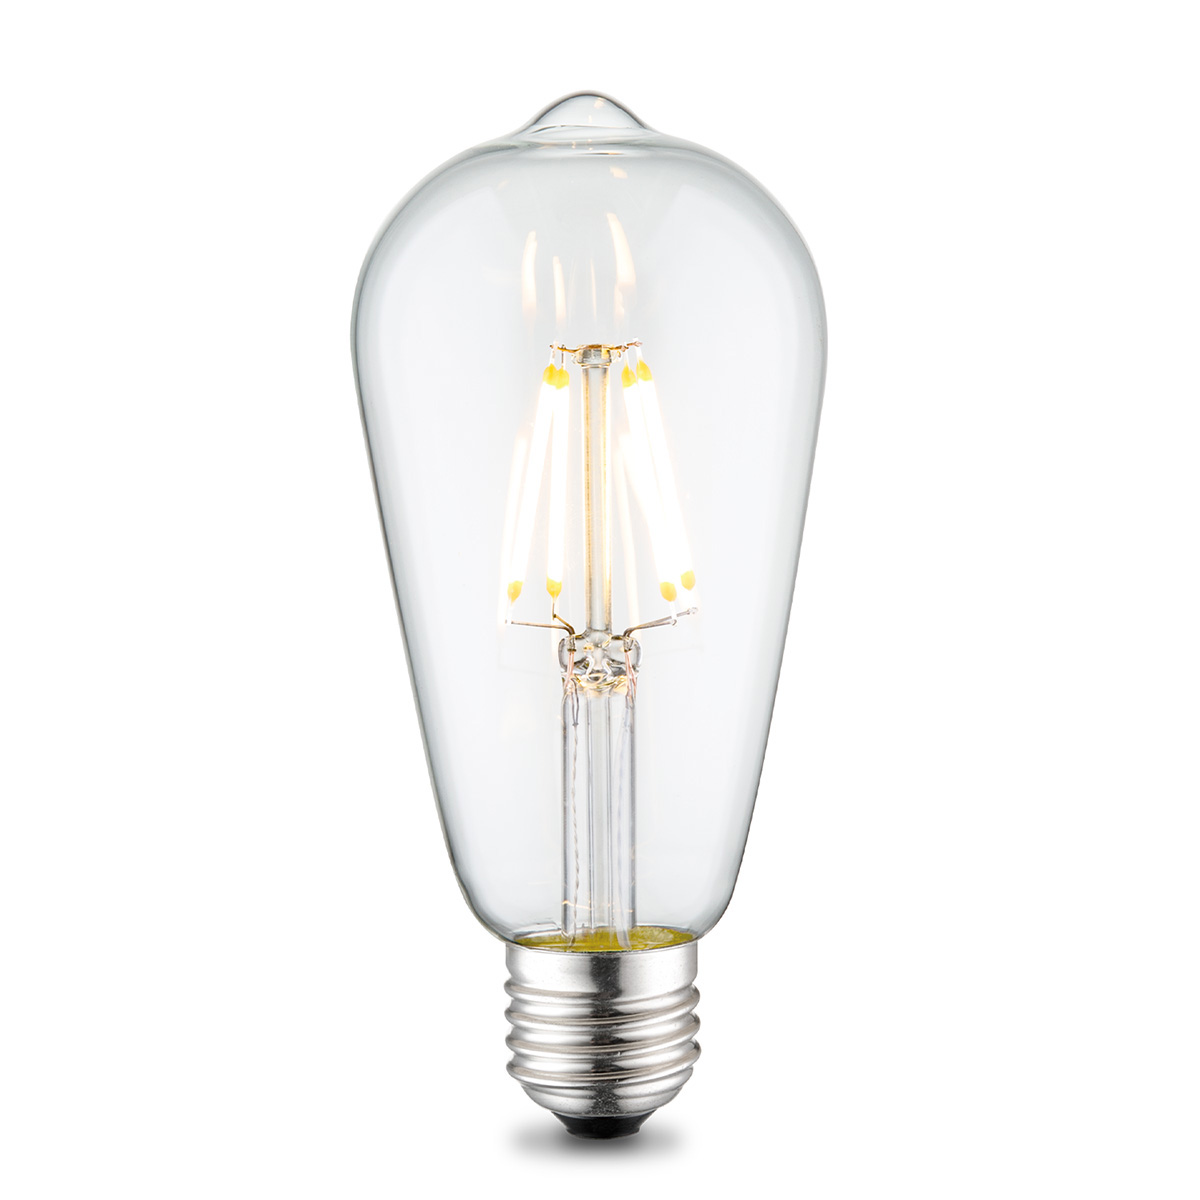 Tangla lighting - TLB-8001-06CL - LED Light Bulb Deco filament - ST64 6W clear - dimmable - E27